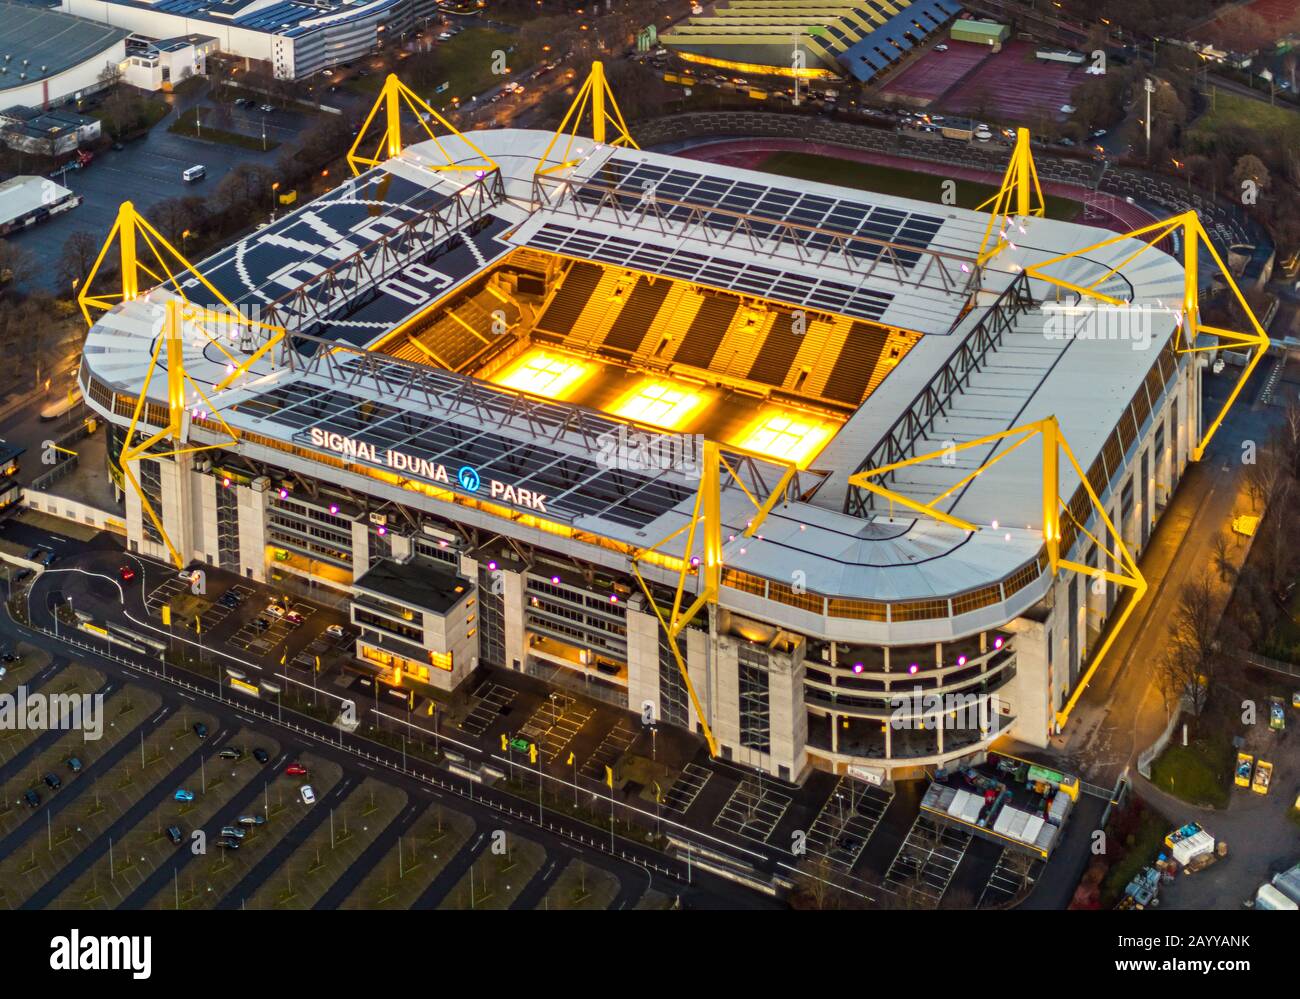 Aerial photo, Signal Iduna Park, SignalIdunaPark, Westphalen Stadium, BVB, Bundesliga Stadium, , Dortmund, Ruhr Area, North Rhine-Westphalia, Germany, Stock Photo